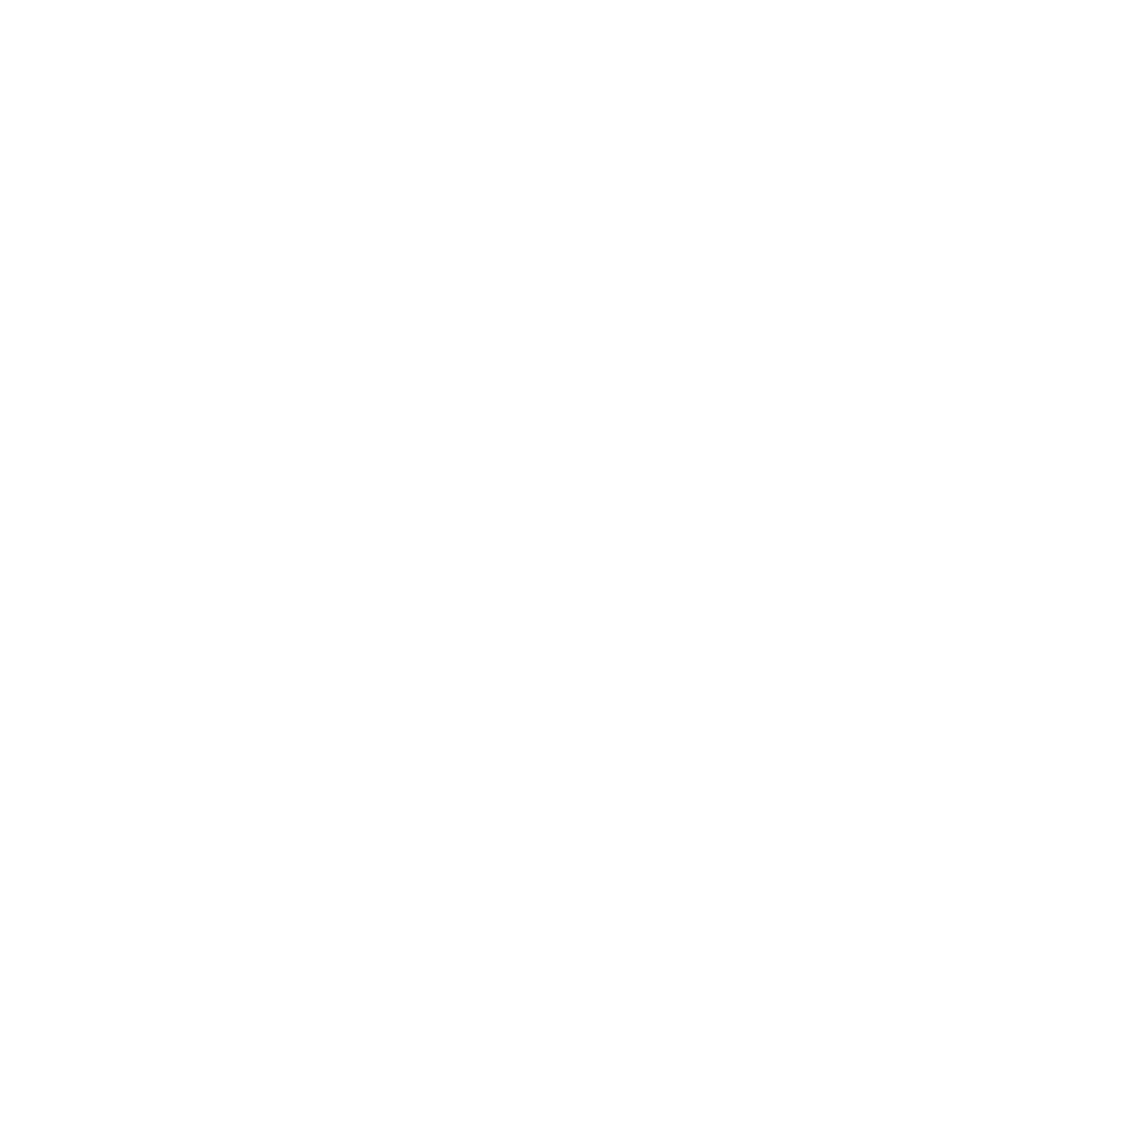 Padel racket